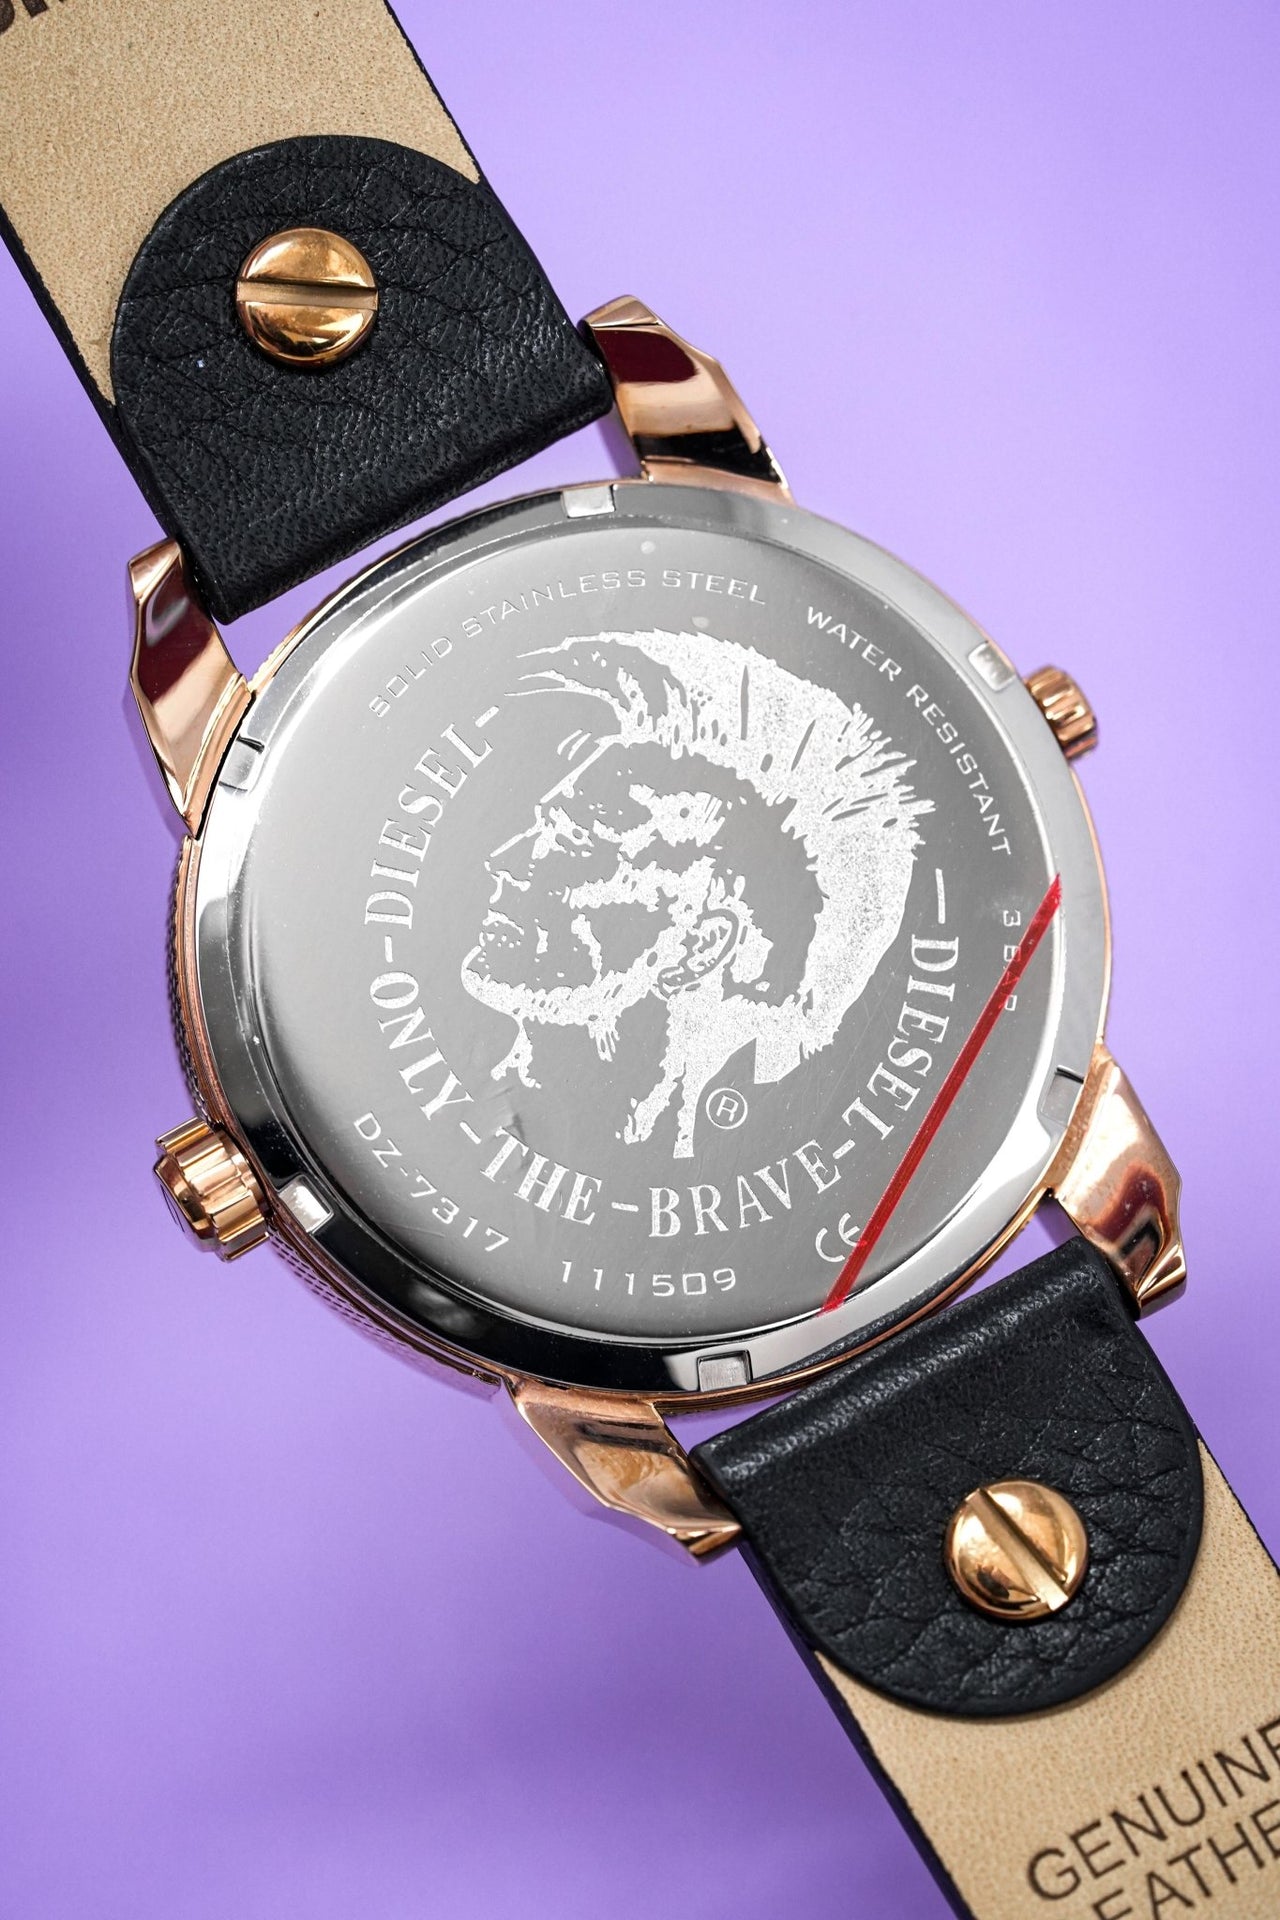 Diesel Men's Watch Mini Daddy Black Rose Gold - Watches & Crystals